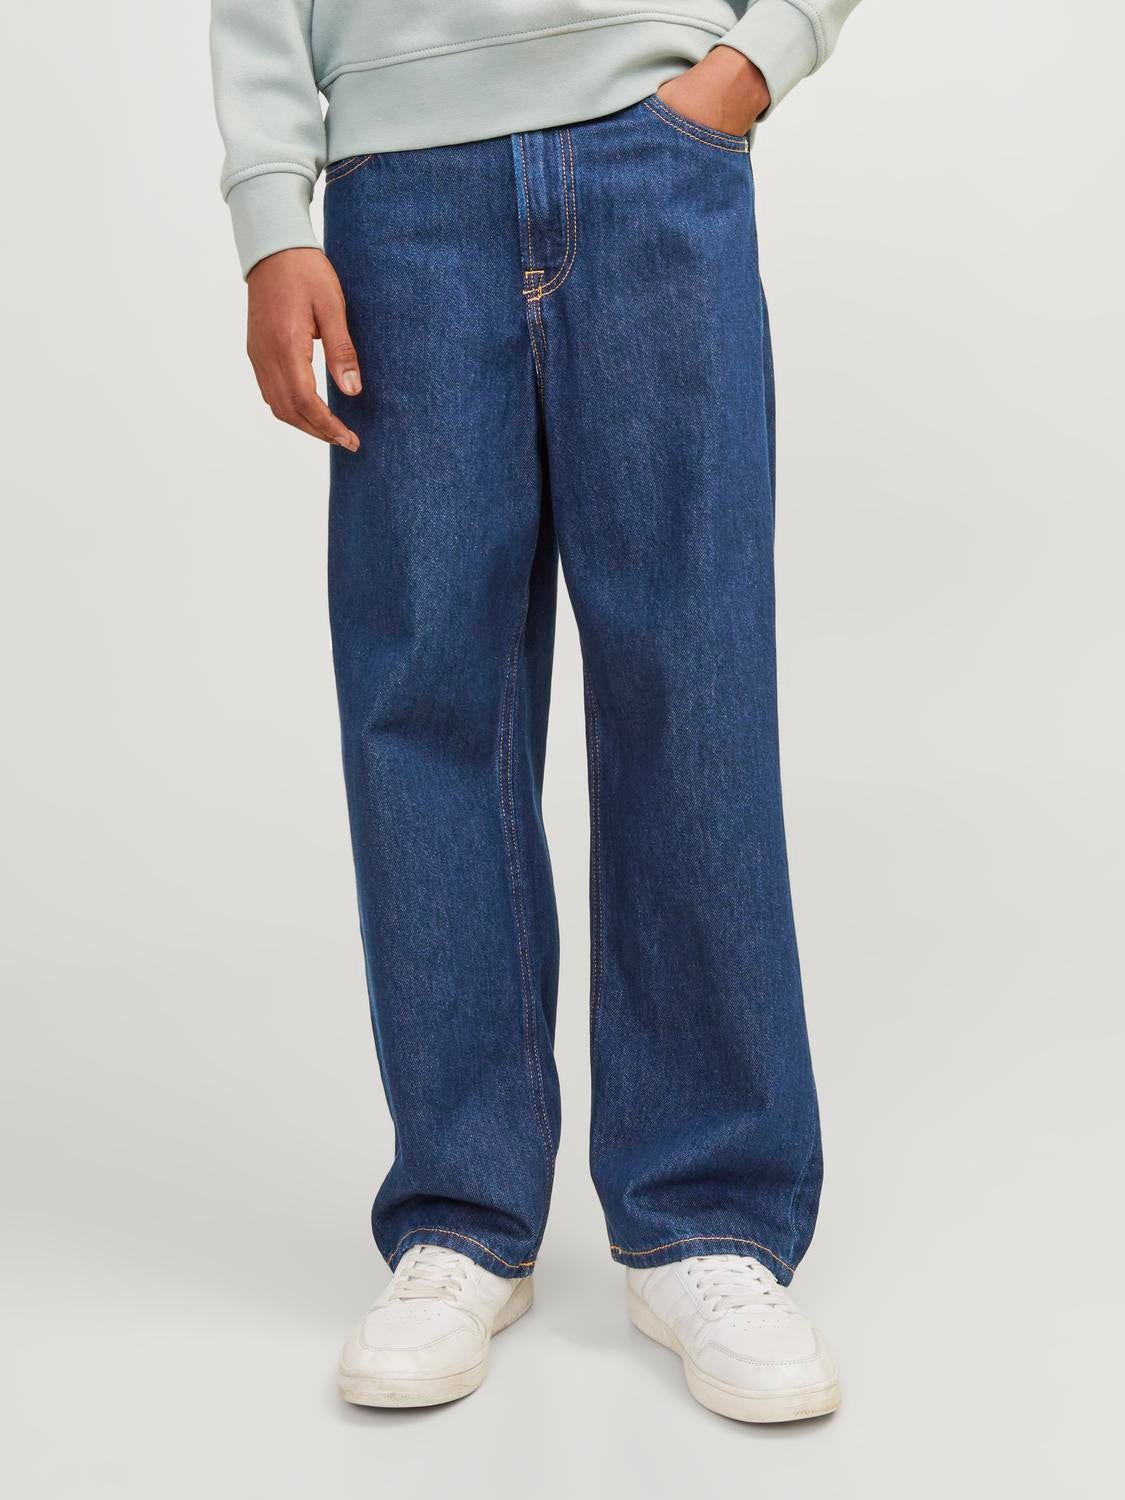 JJIALEX JJORIGINAL MF 383 Baggy fit jeans For boys